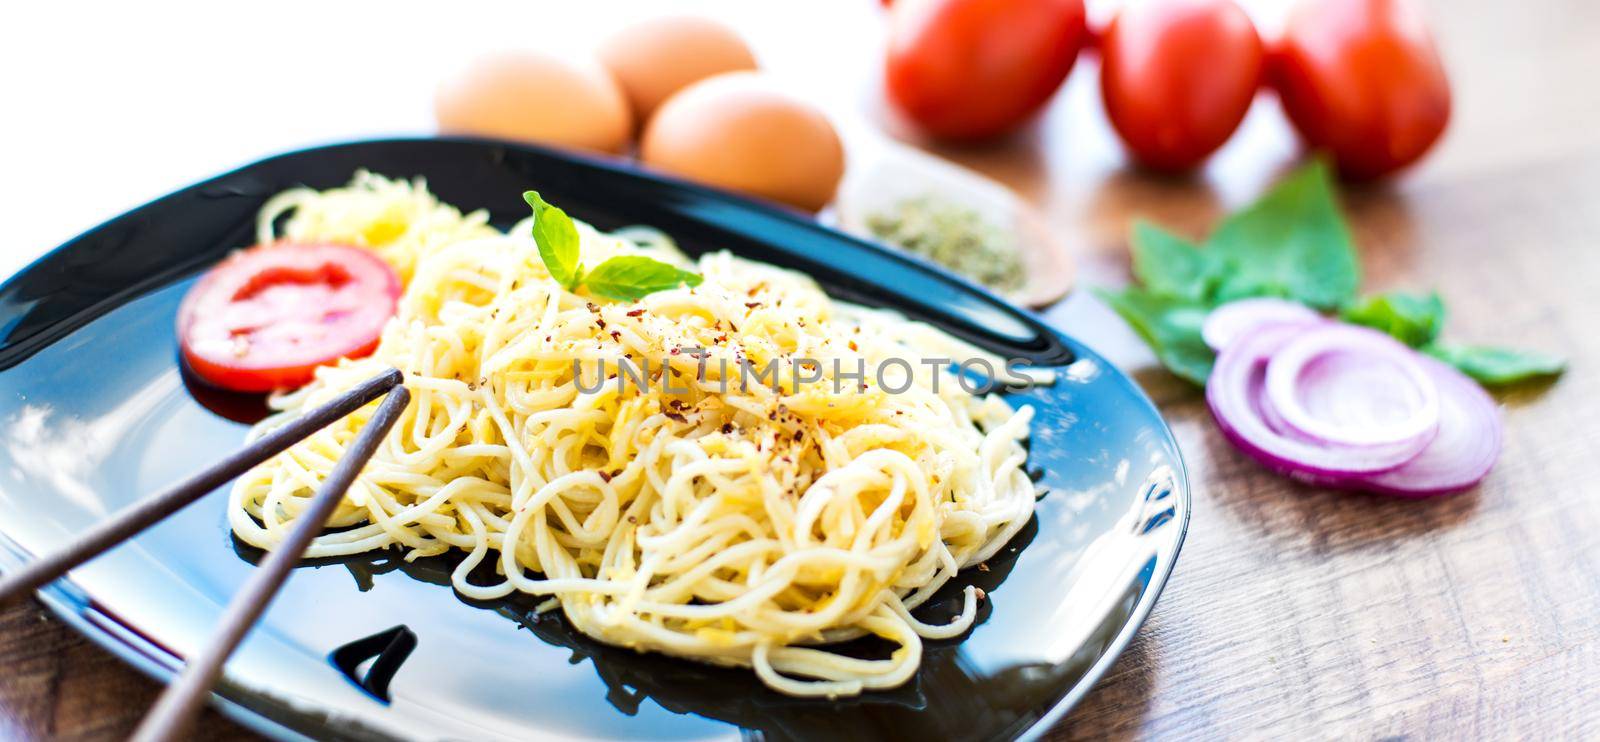 spaghetti dinner by GekaSkr